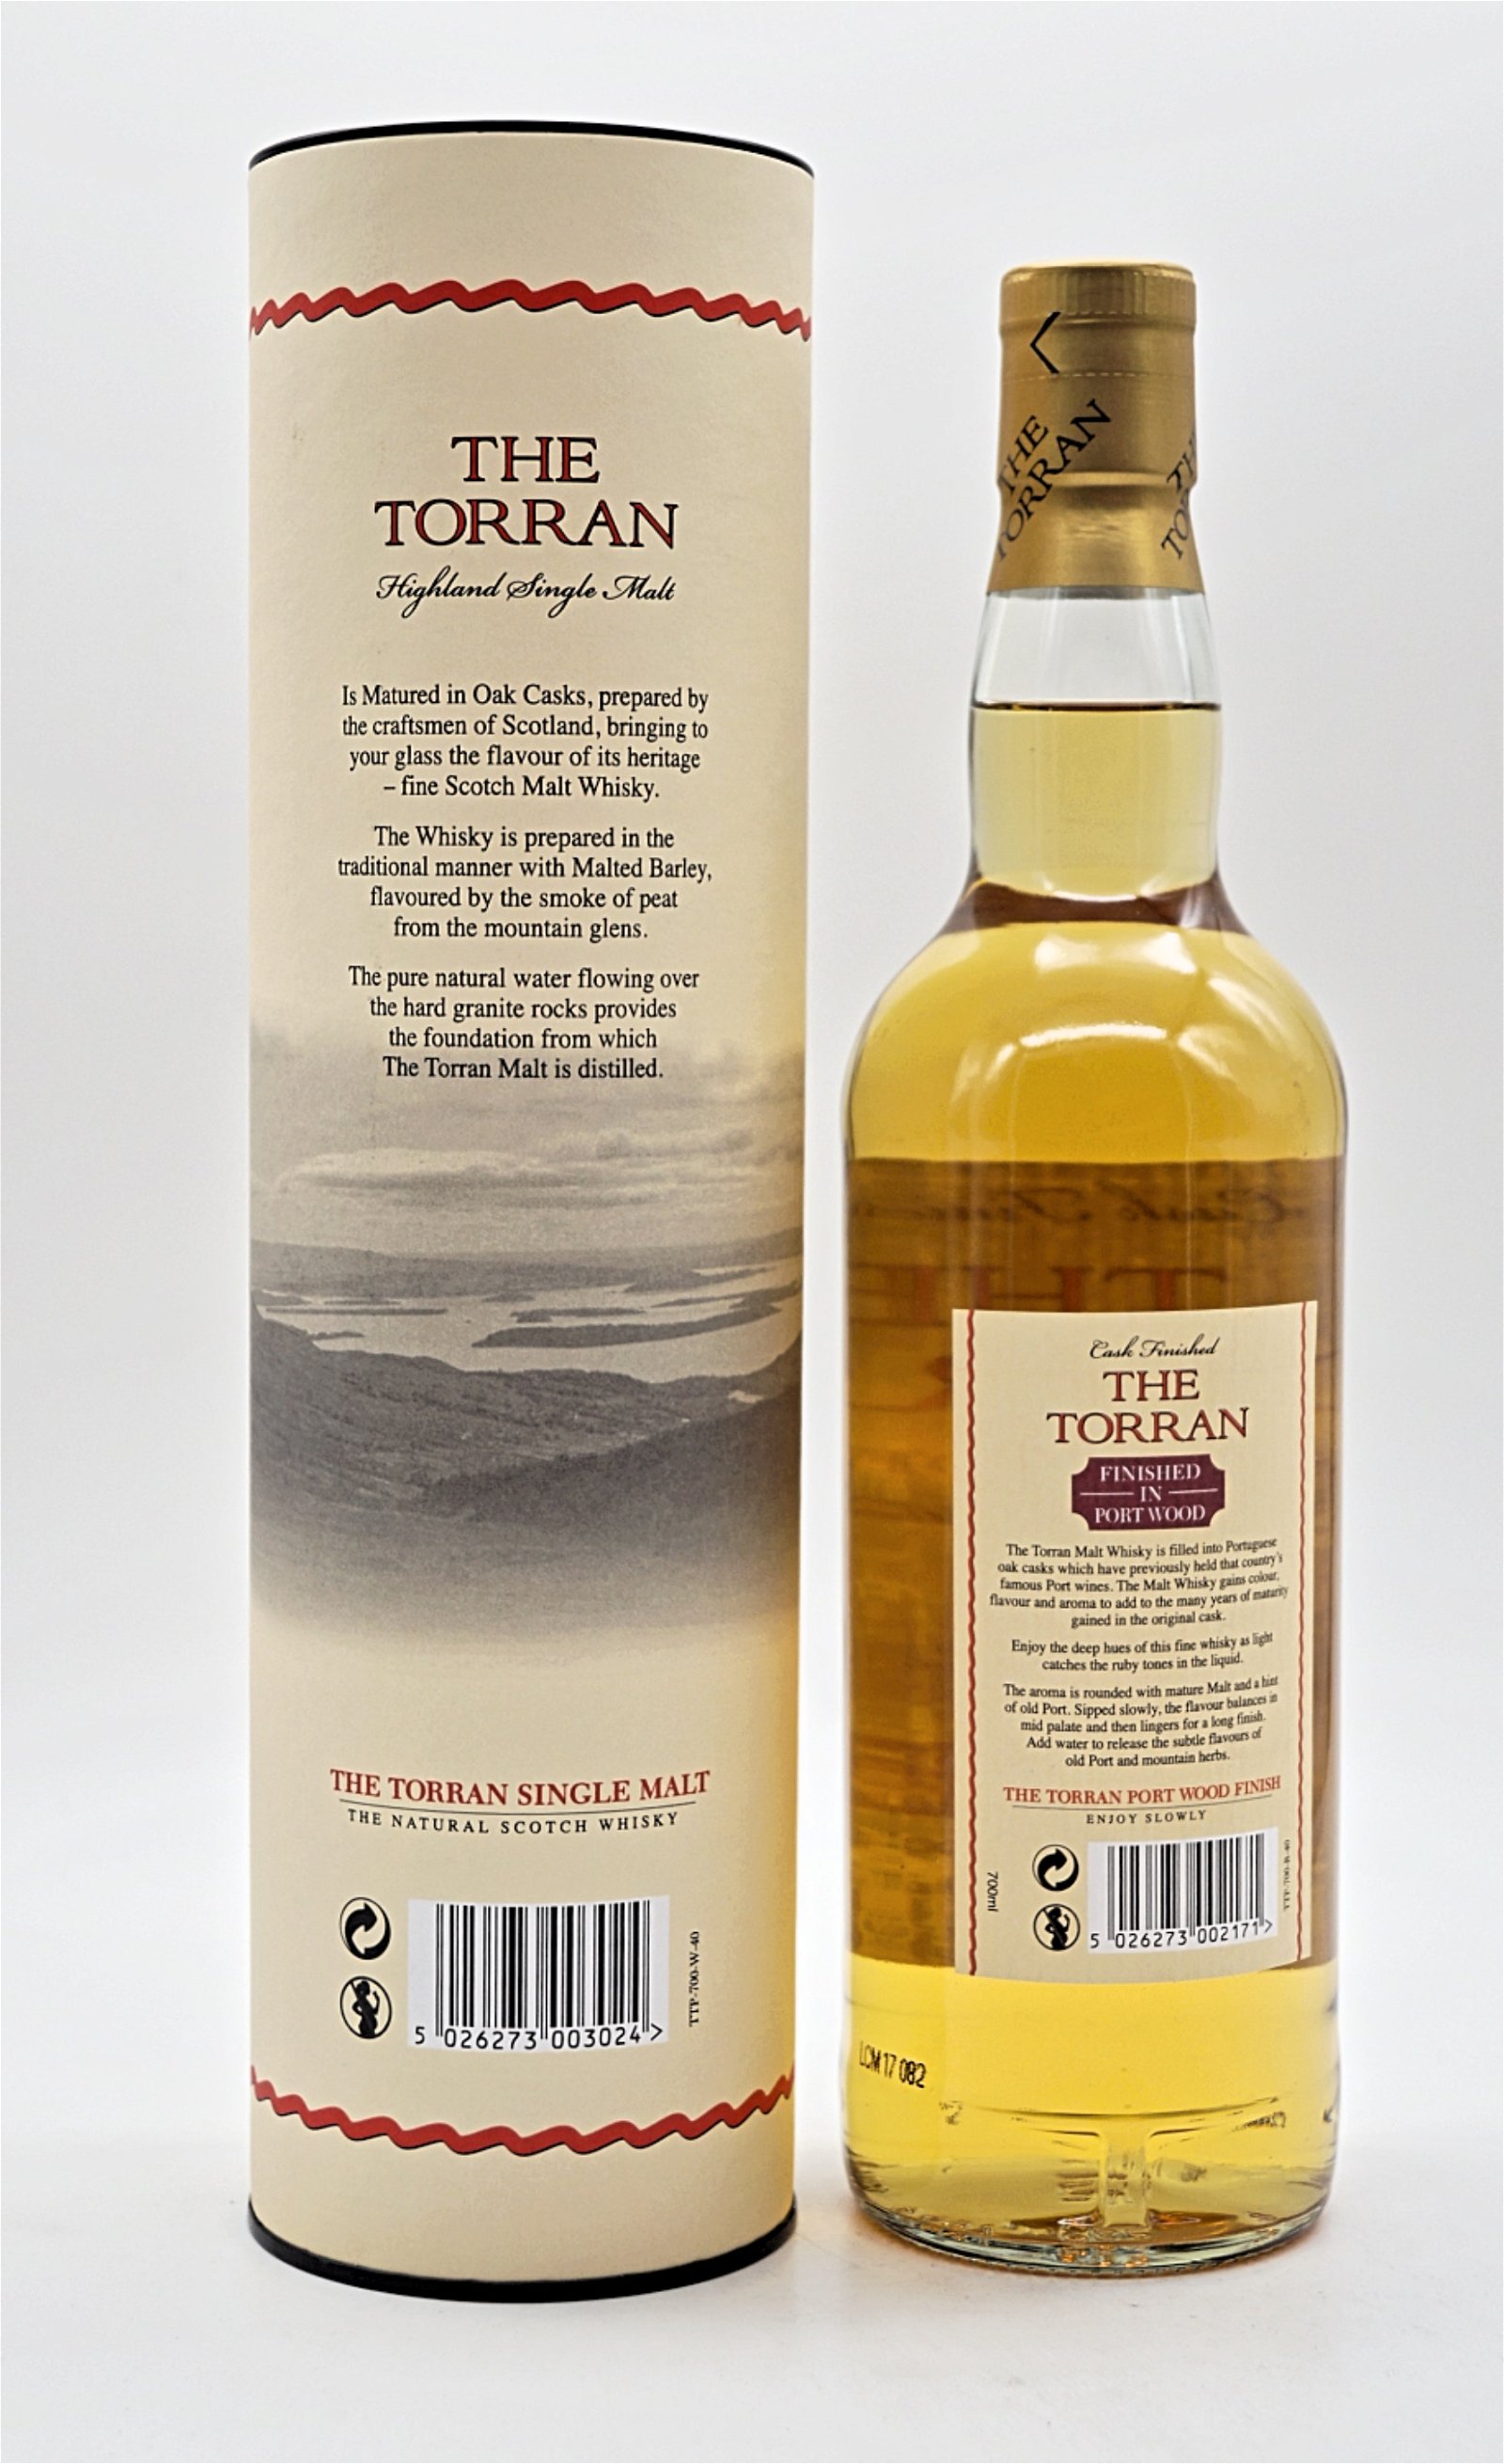 The Torran Finished in Port Wood Highland Single Malt Scotch Whisky